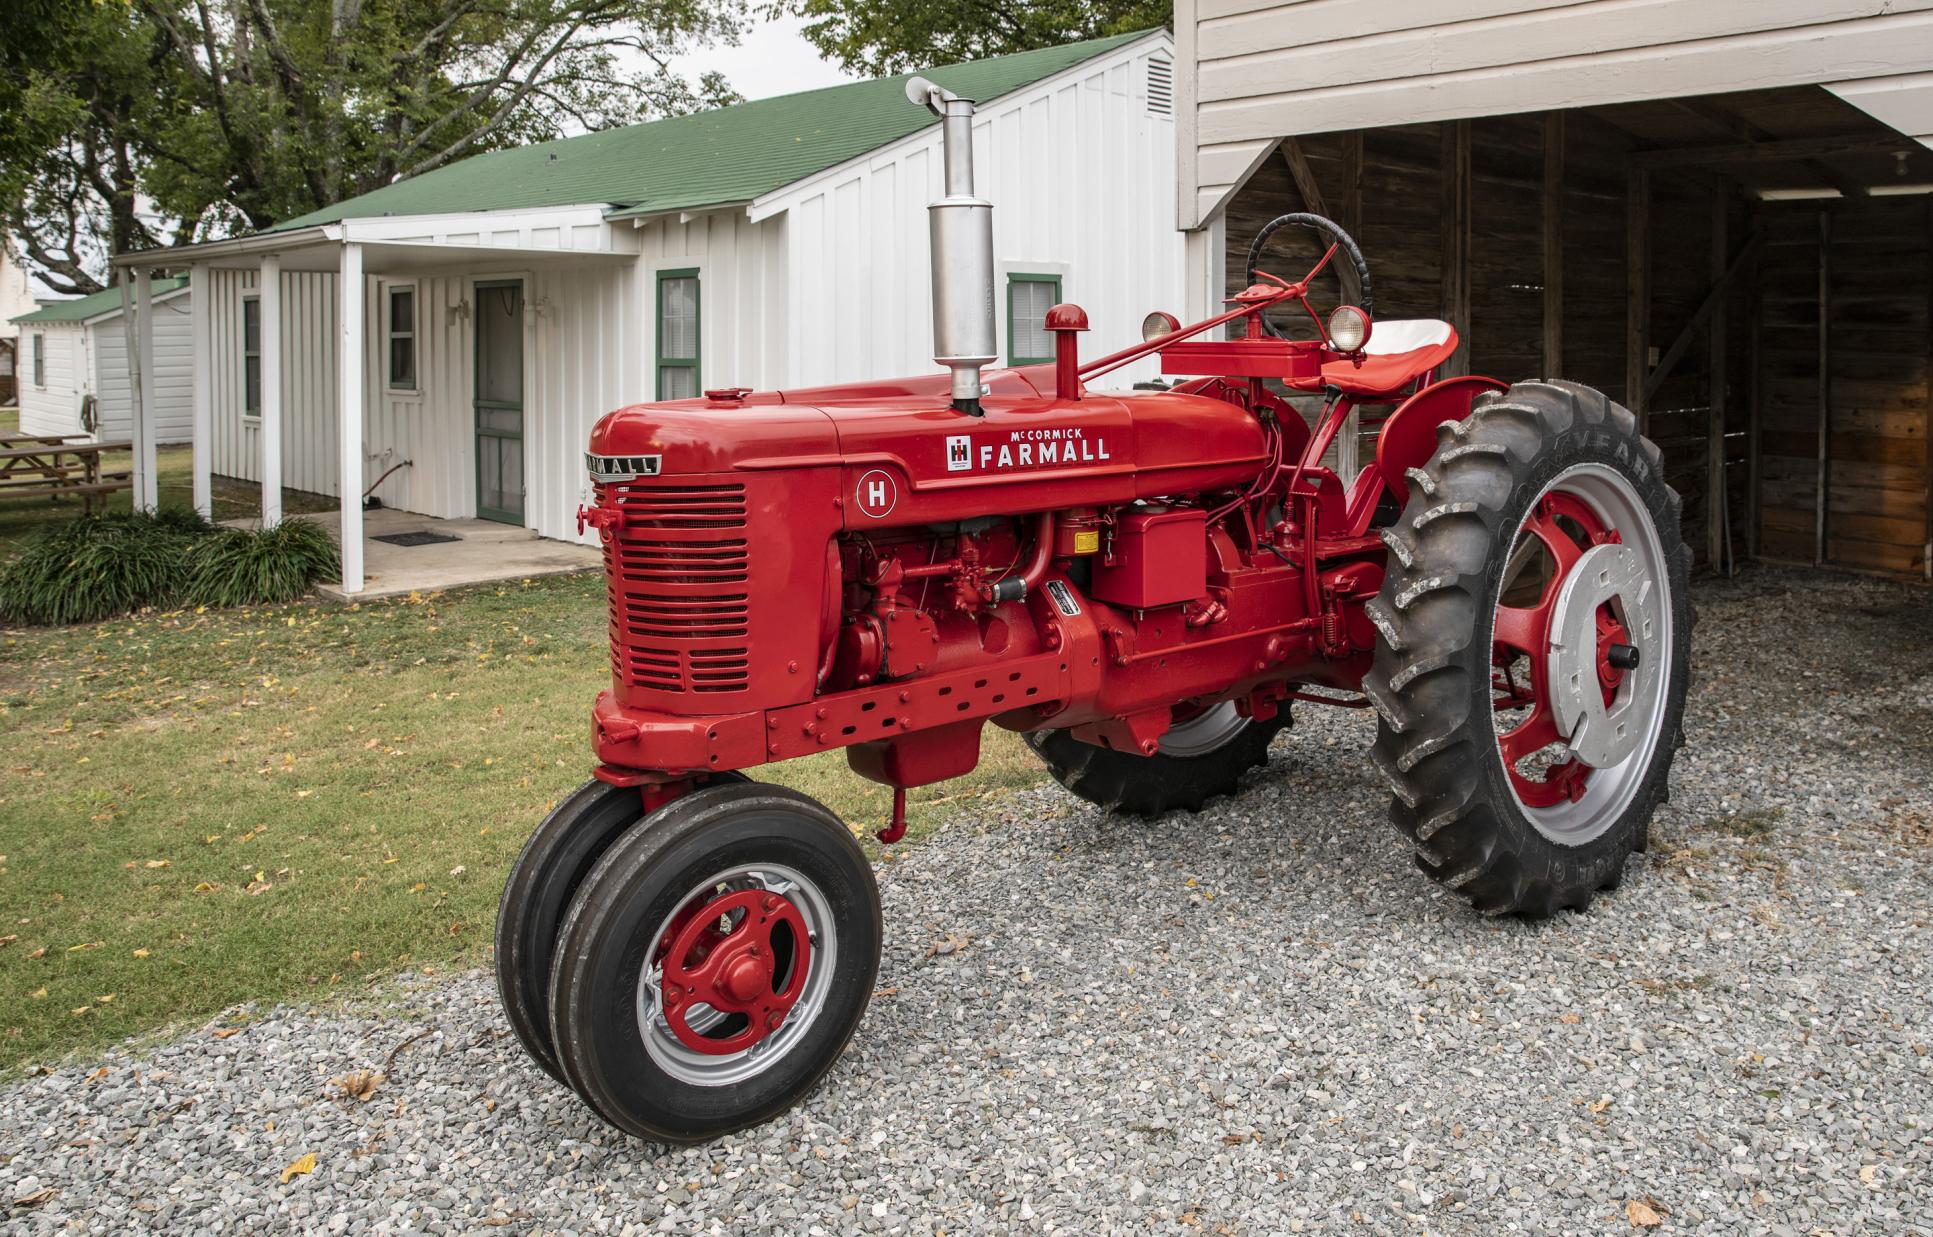 Sam Rayburn's tractor